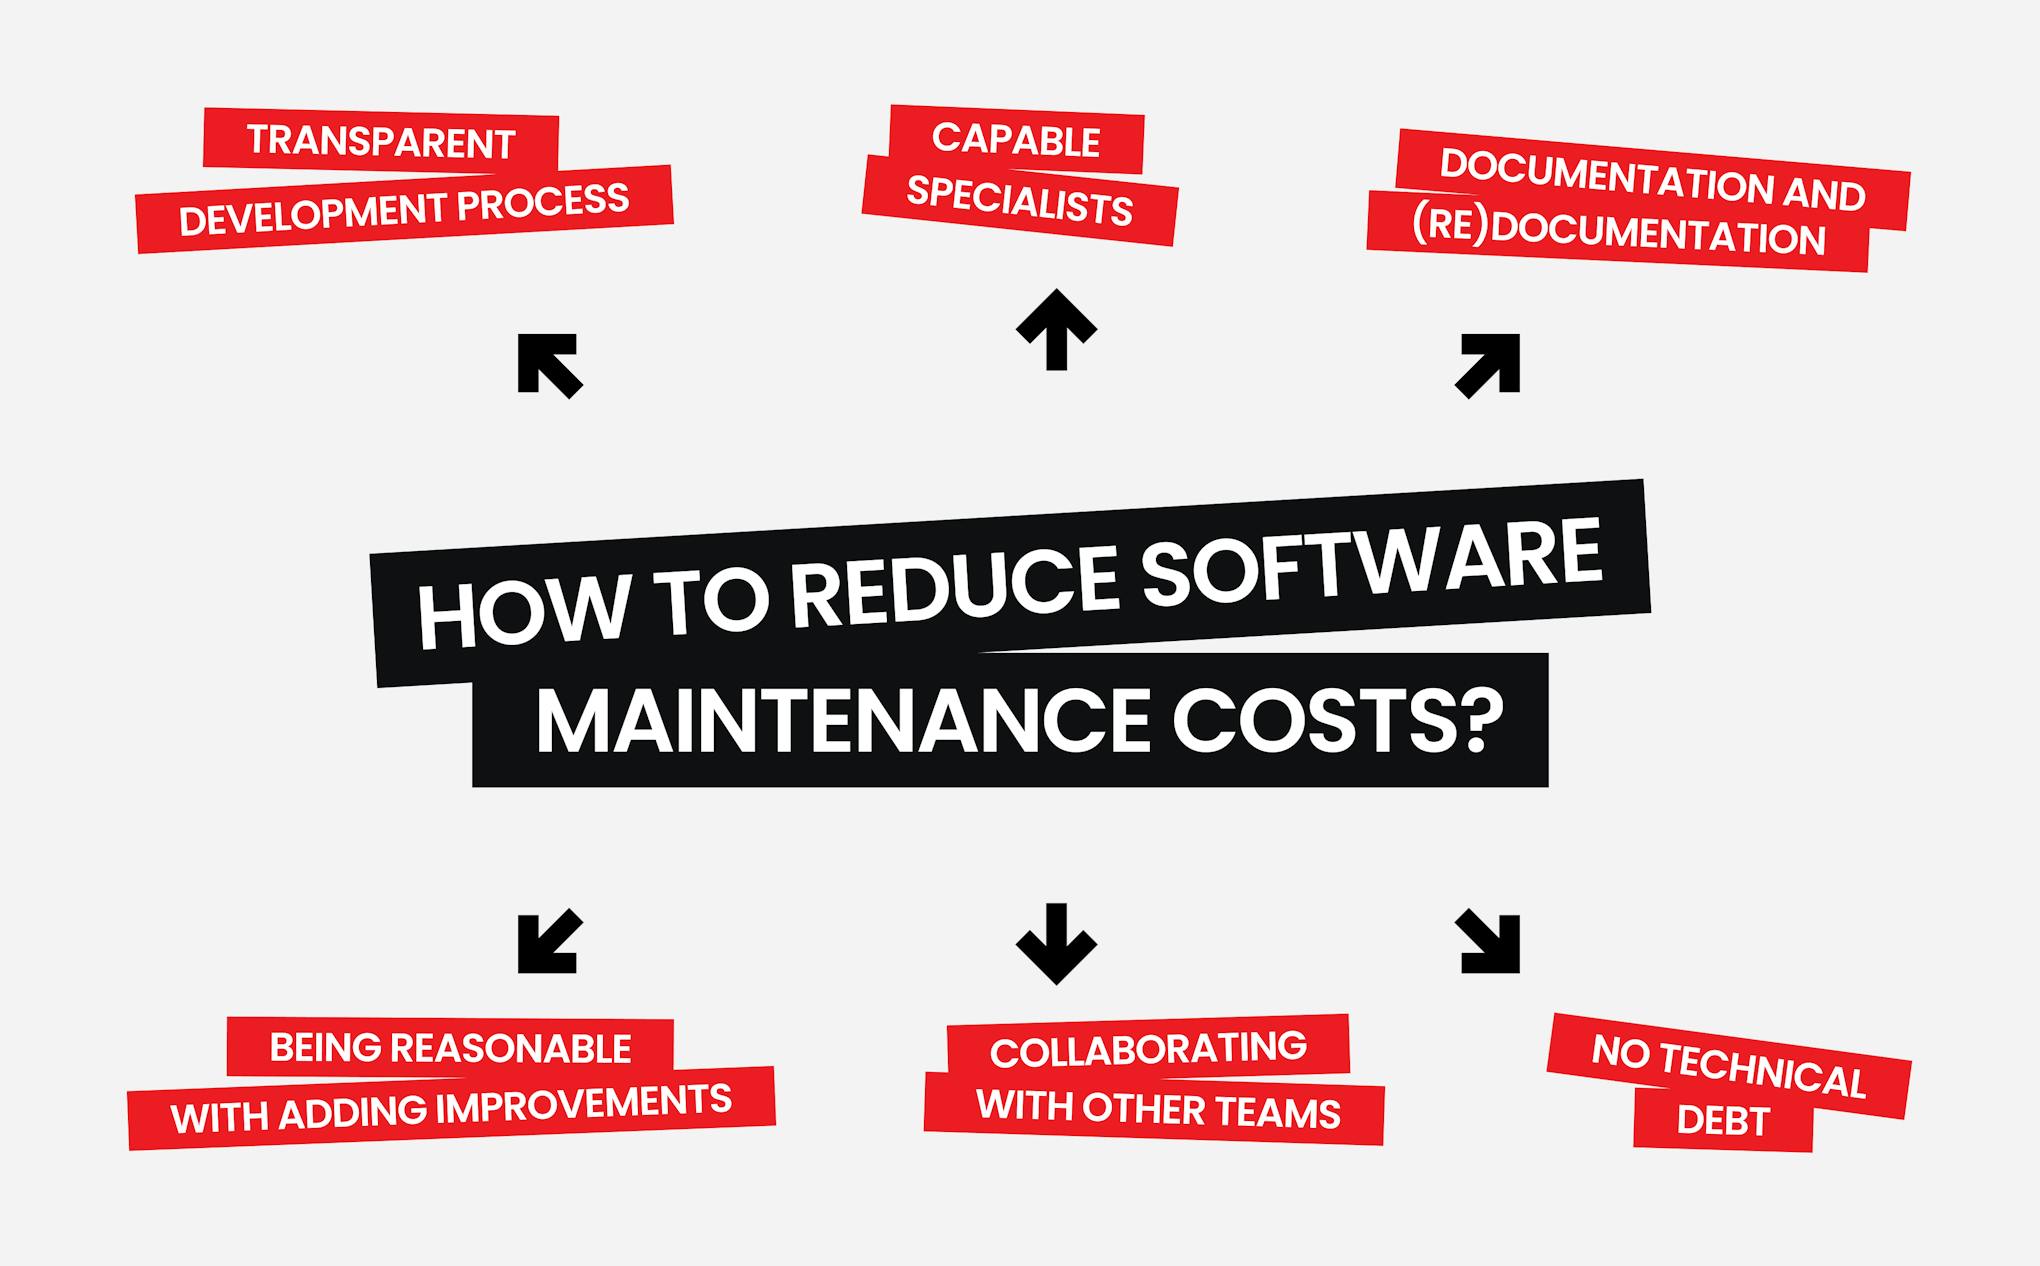 Reduce softare maintenance costs.